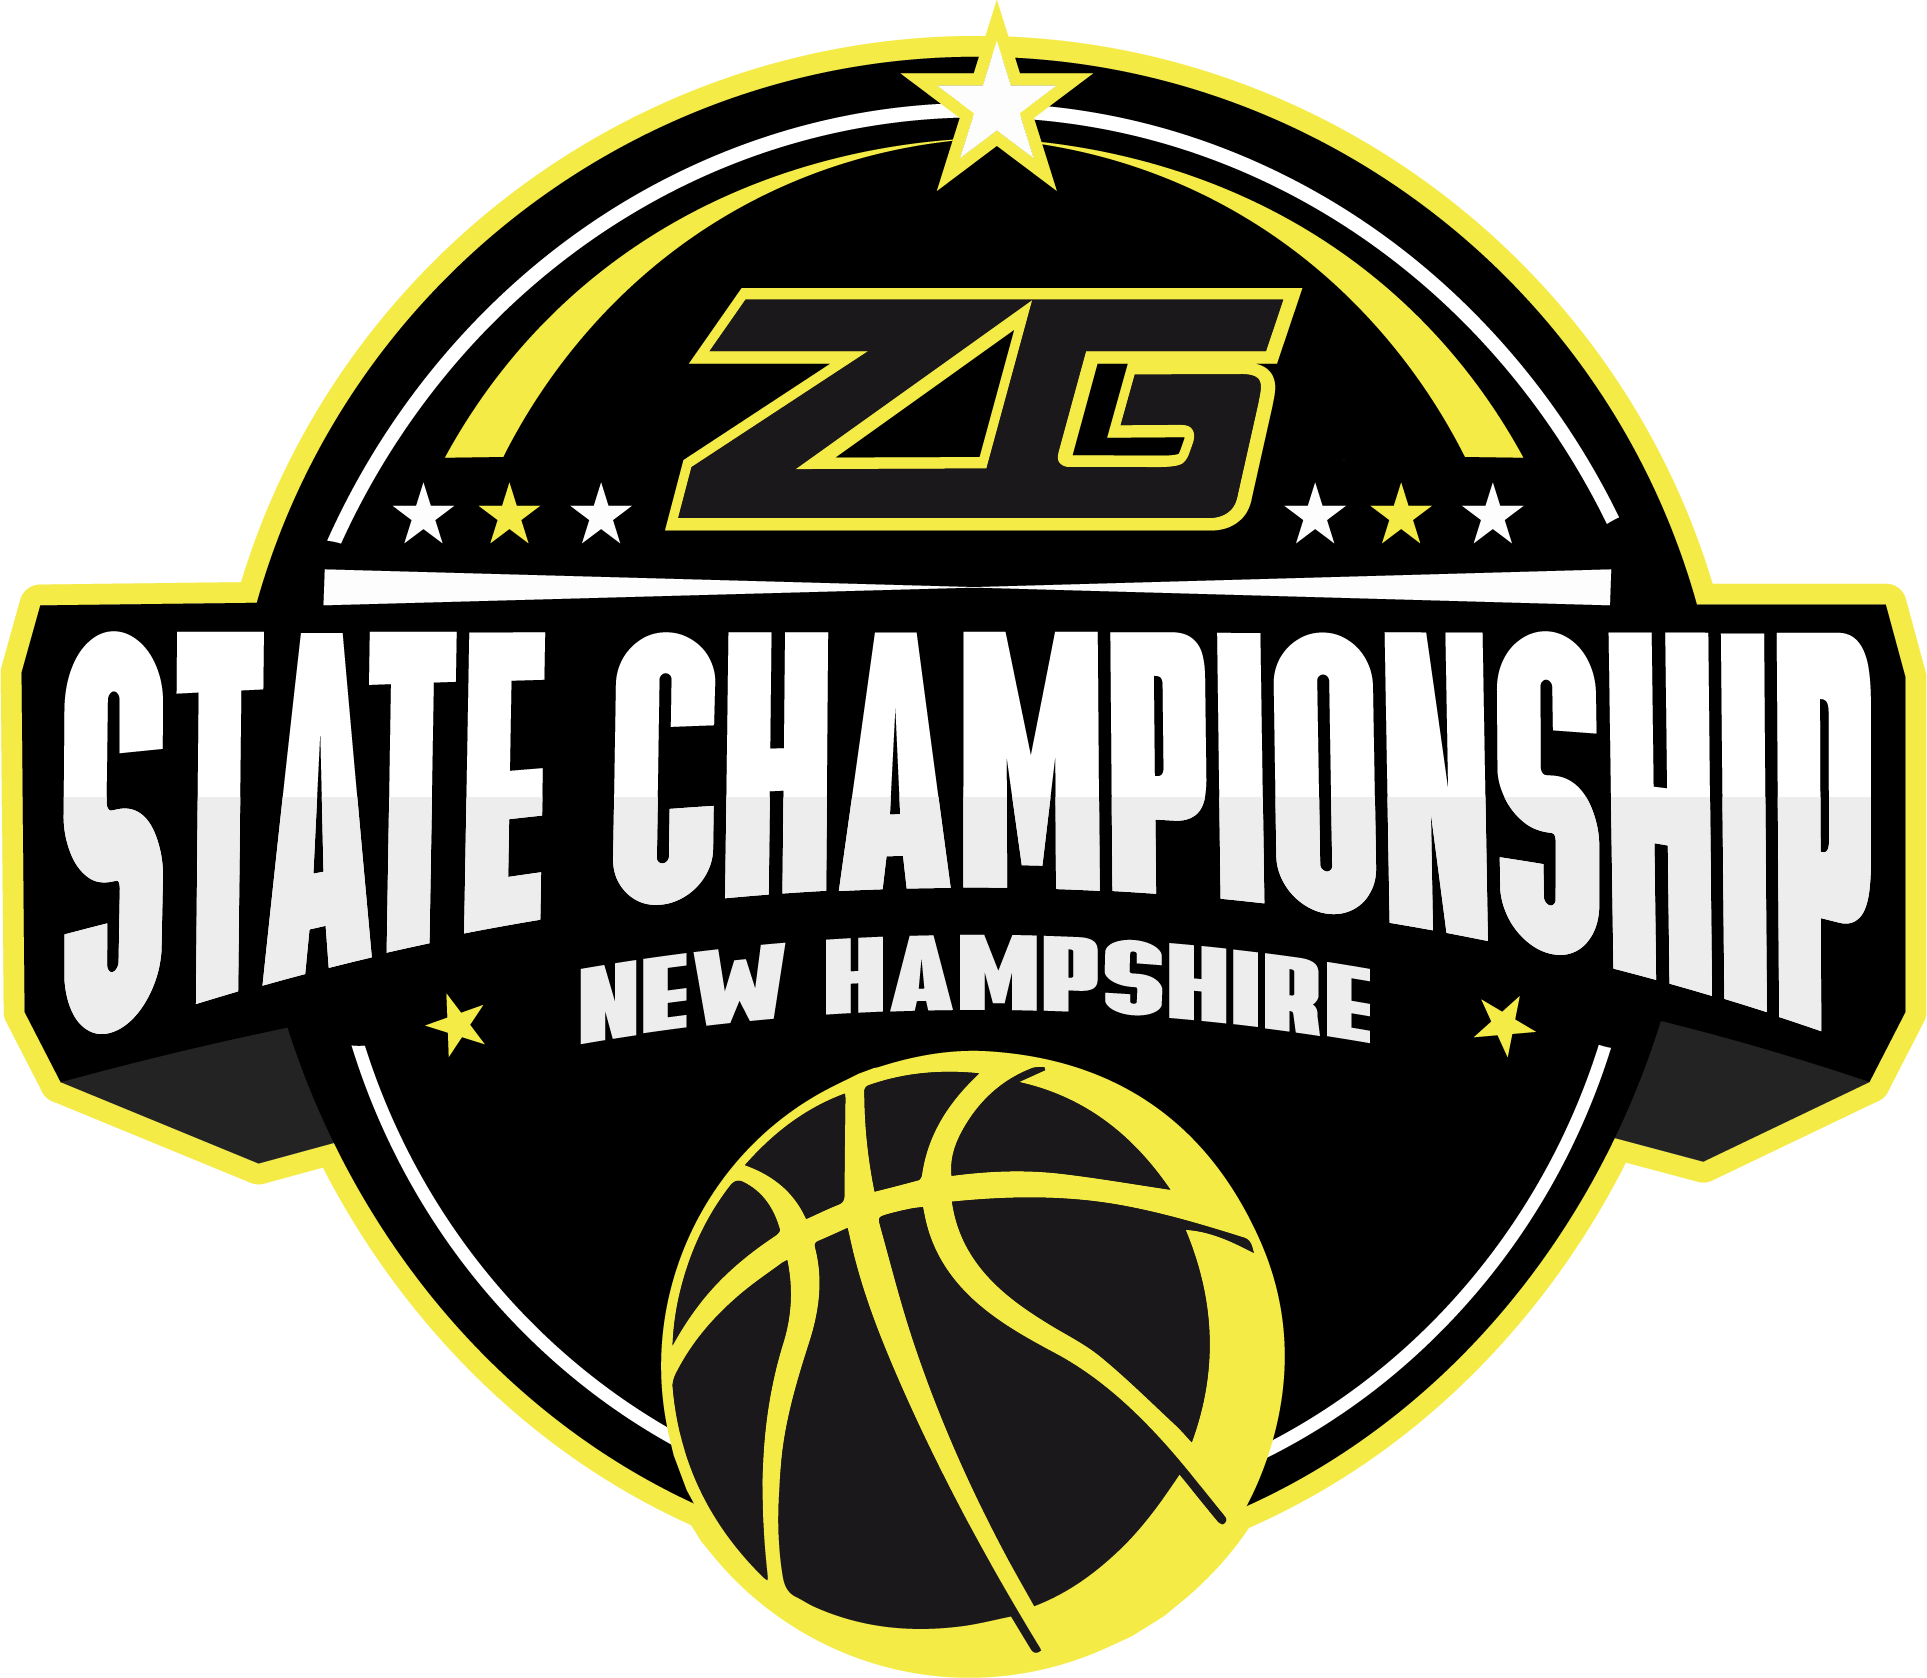 ZG State Championship New Hampshire